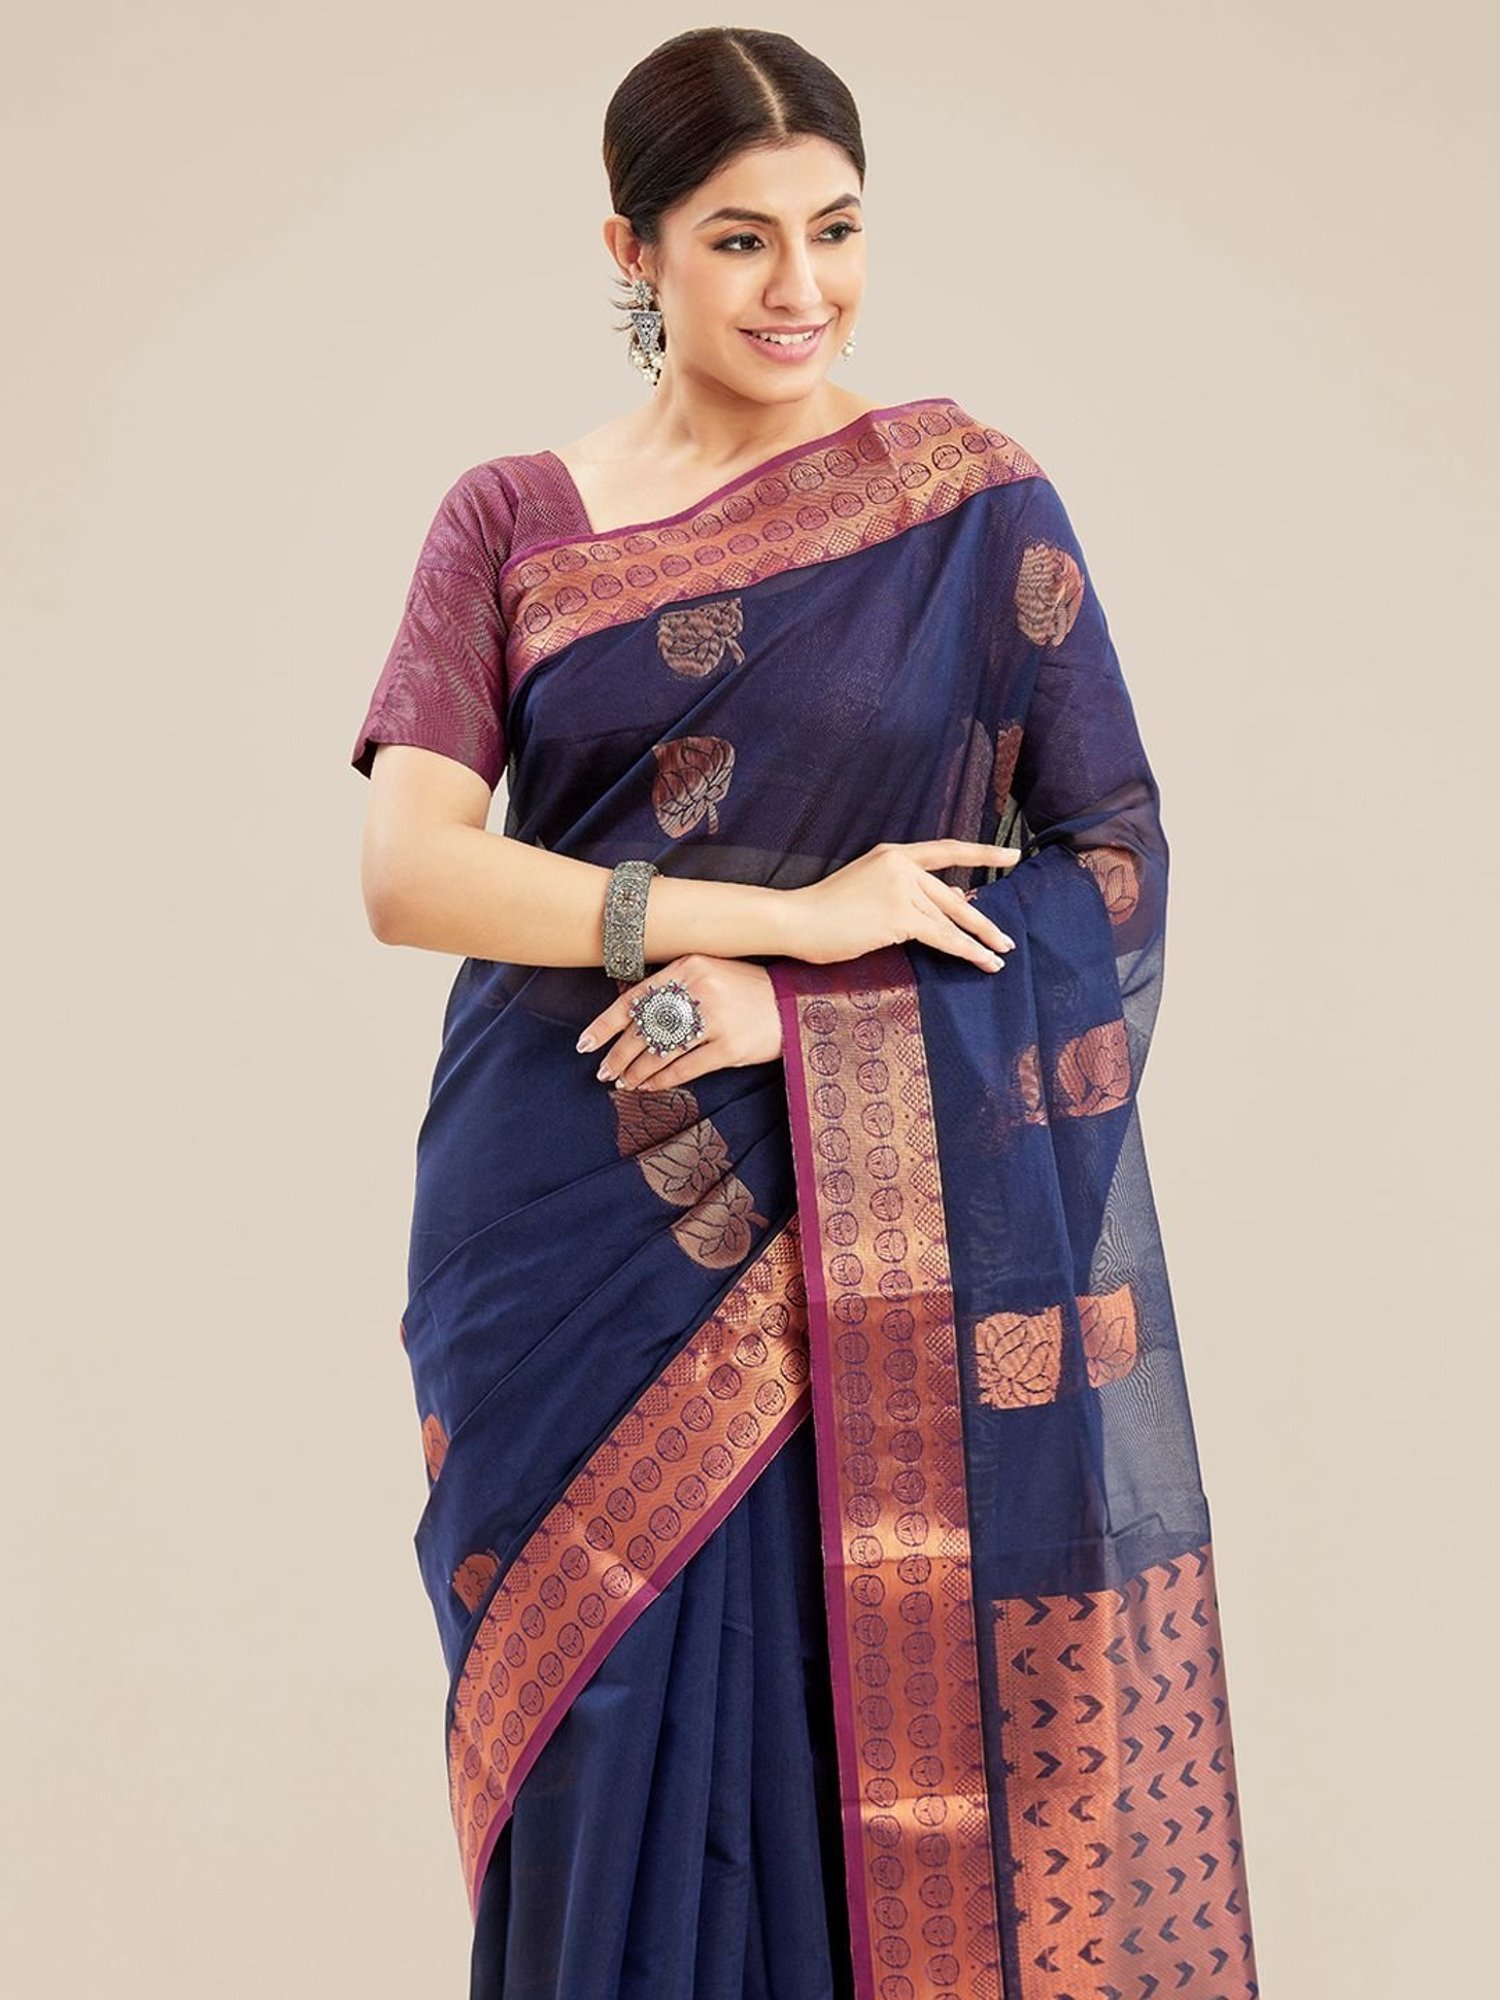 Kalyan Silks - Chiku Color Semi Stitched #Lehenga (Rs6,825) @ #kalyansilks.com  Shop Online: https://bit.ly/2WrlPuK | Facebook